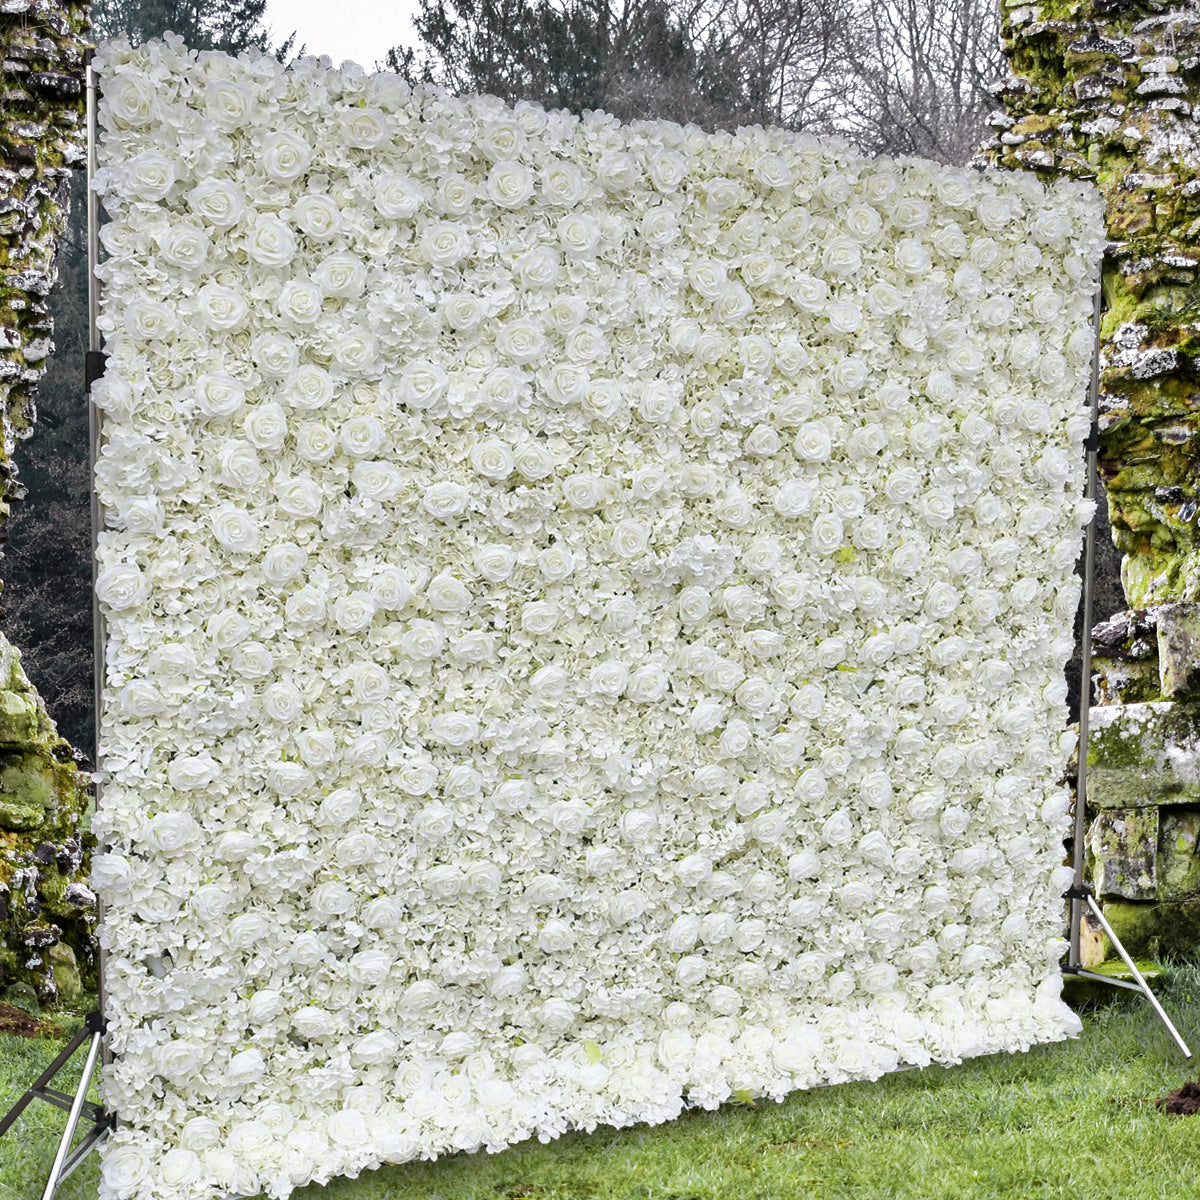 3D Artificial Flower Wall Arrangement Wedding Party Birthday Backdrop Decor HQ9007